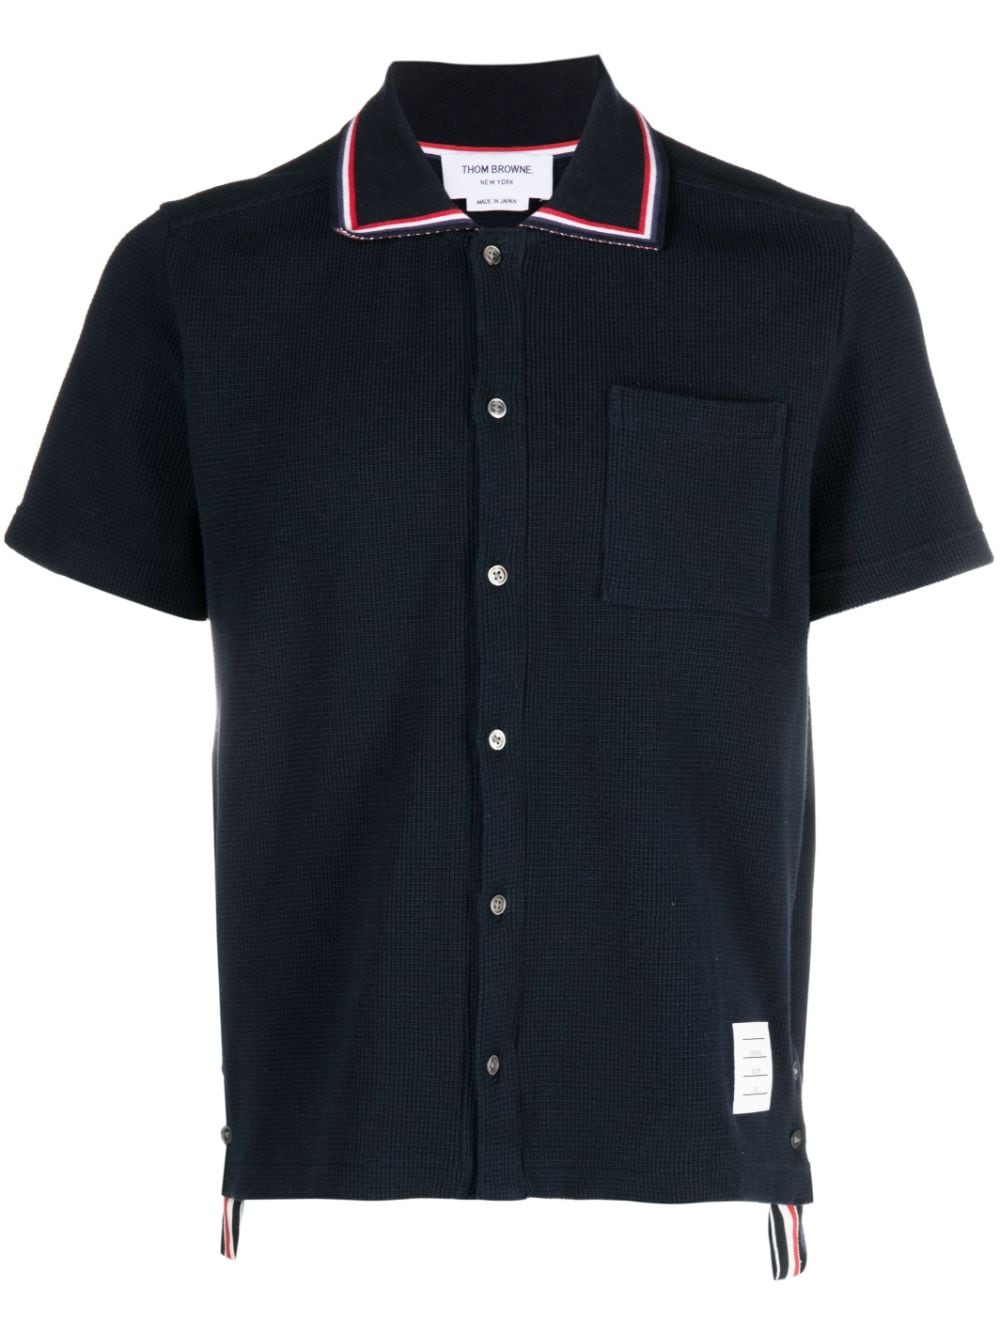 Short Sleeve Cotton Shirt (Navy)